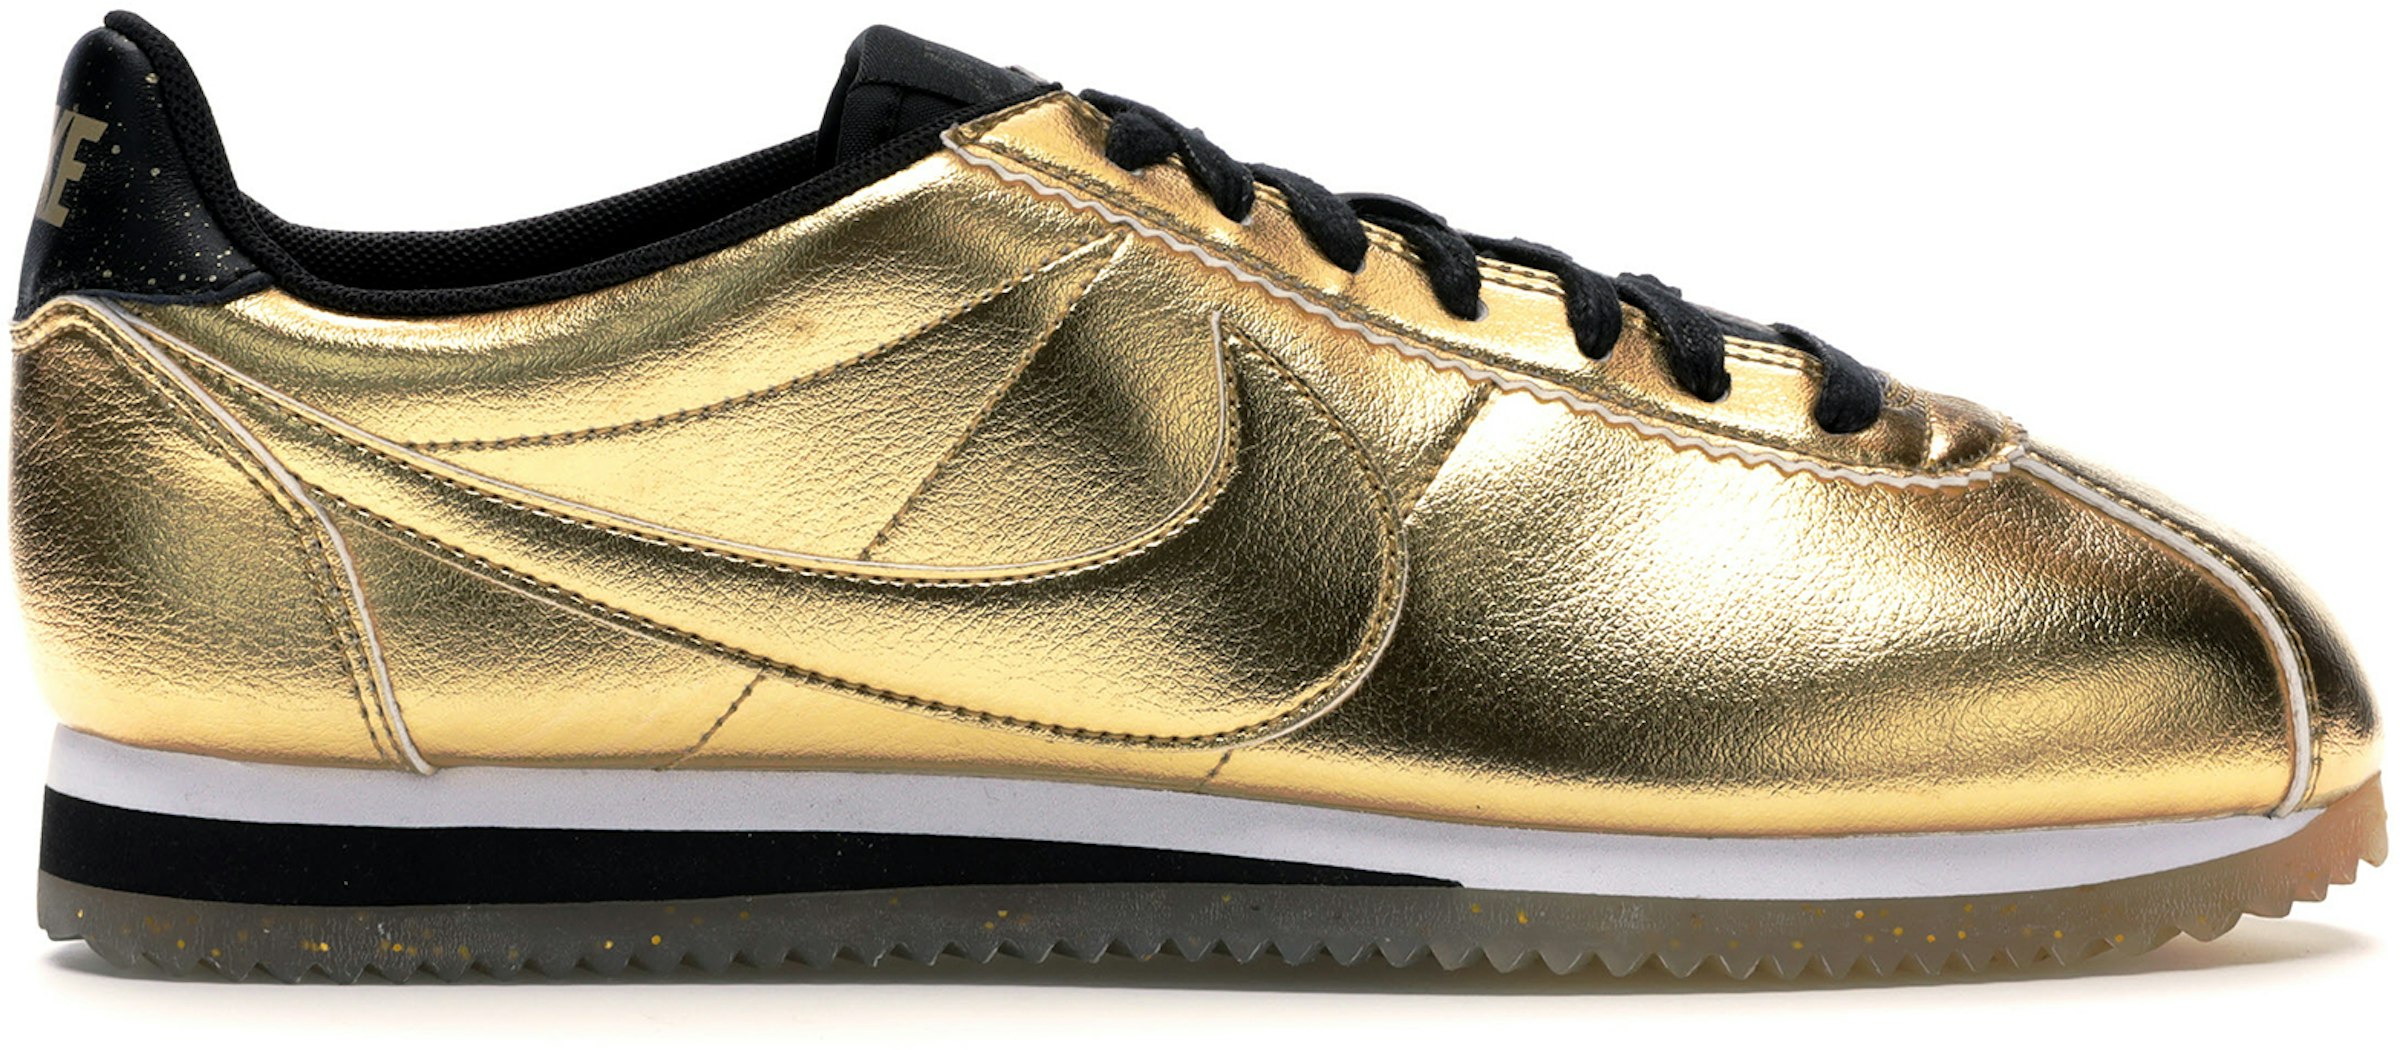 schraper tempo Maken Nike Classic Cortez Metallic Gold (Women's) - 902854-700 - US